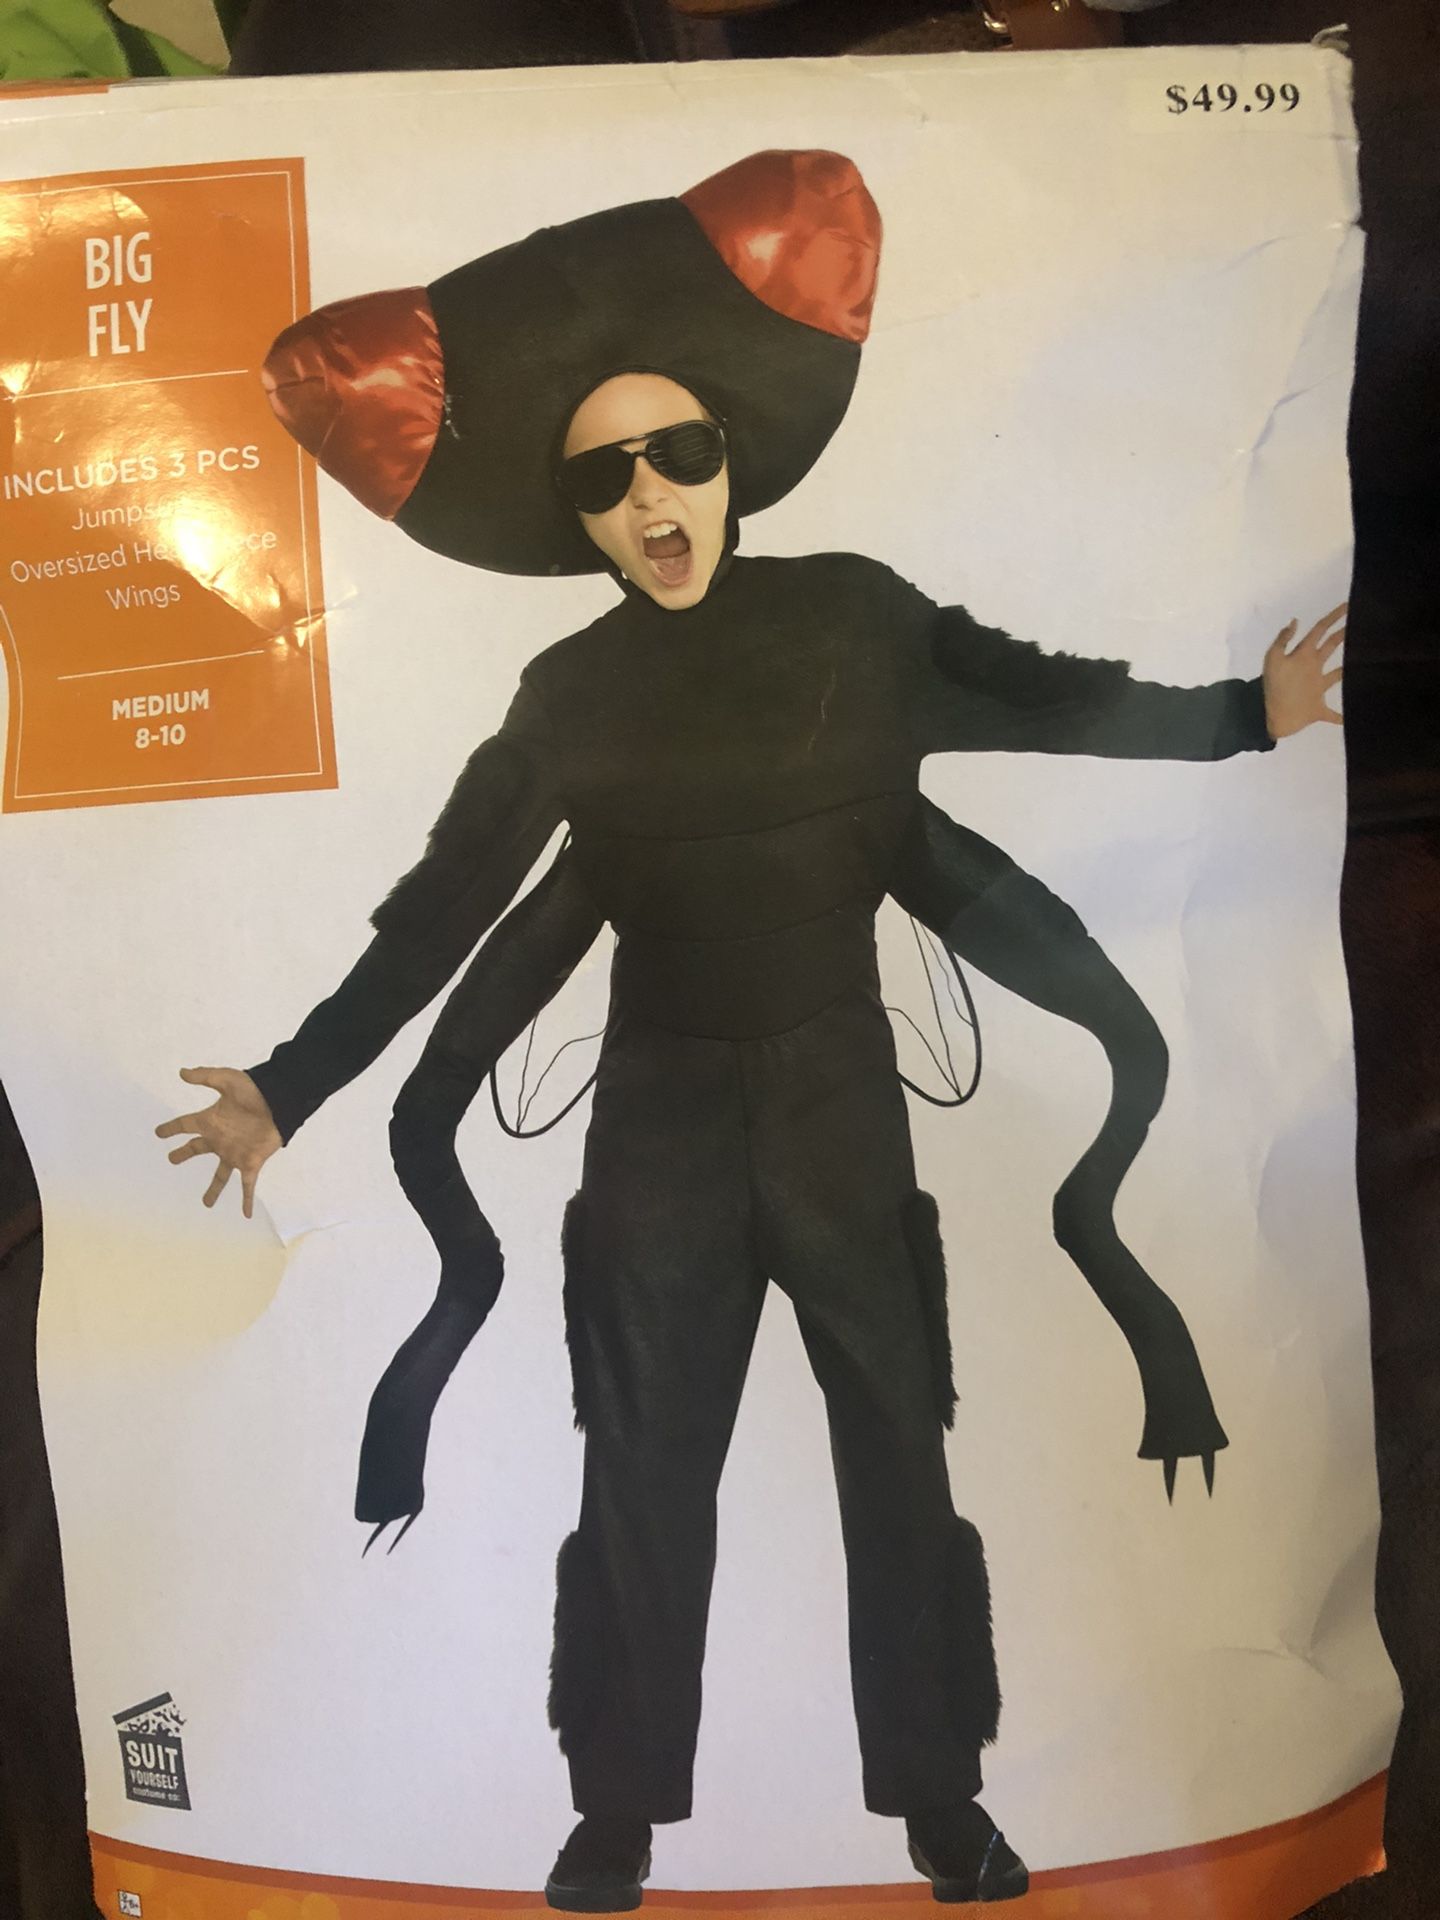 Giant big fly insect halloween costume children  medium 8-10 new